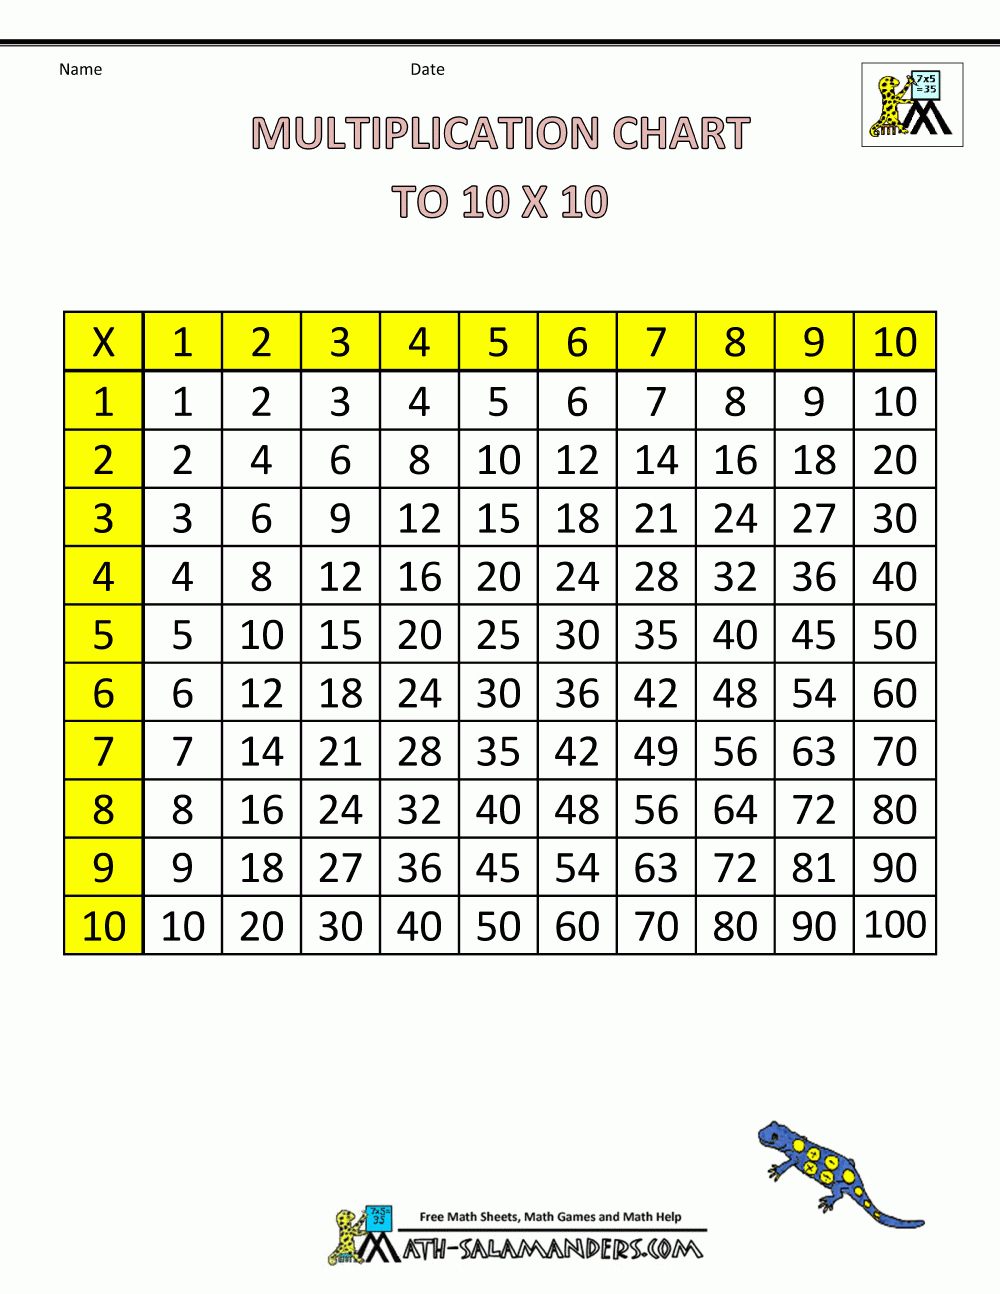 Multiplication Times Table Chart - Free Printable Math Multiplication Charts